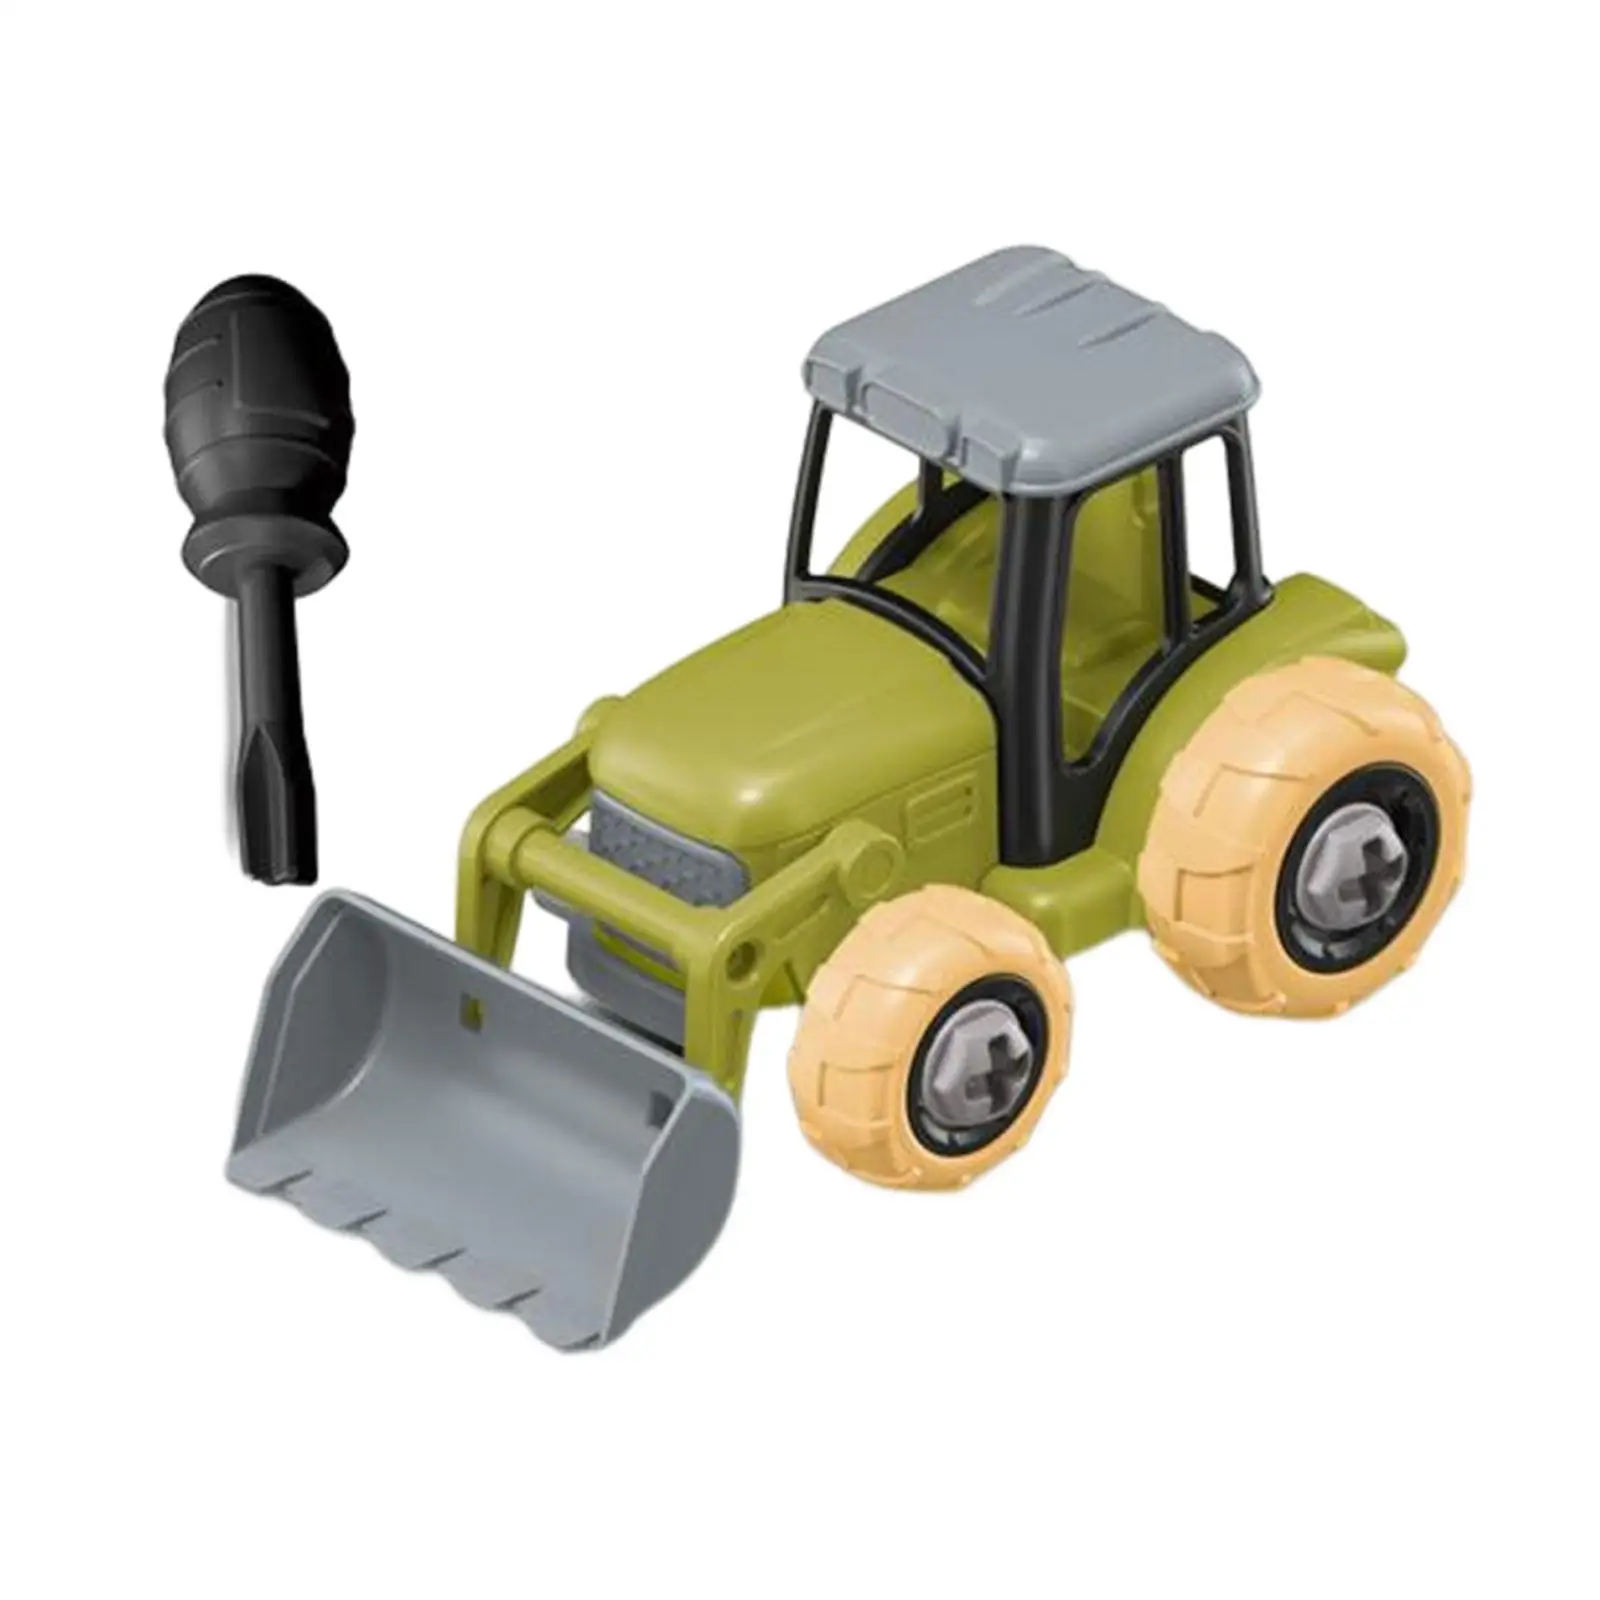 Take Apart Toy Excavator Truck Early Childhood Developmental Skills Construction Engineering Toys for Preschool